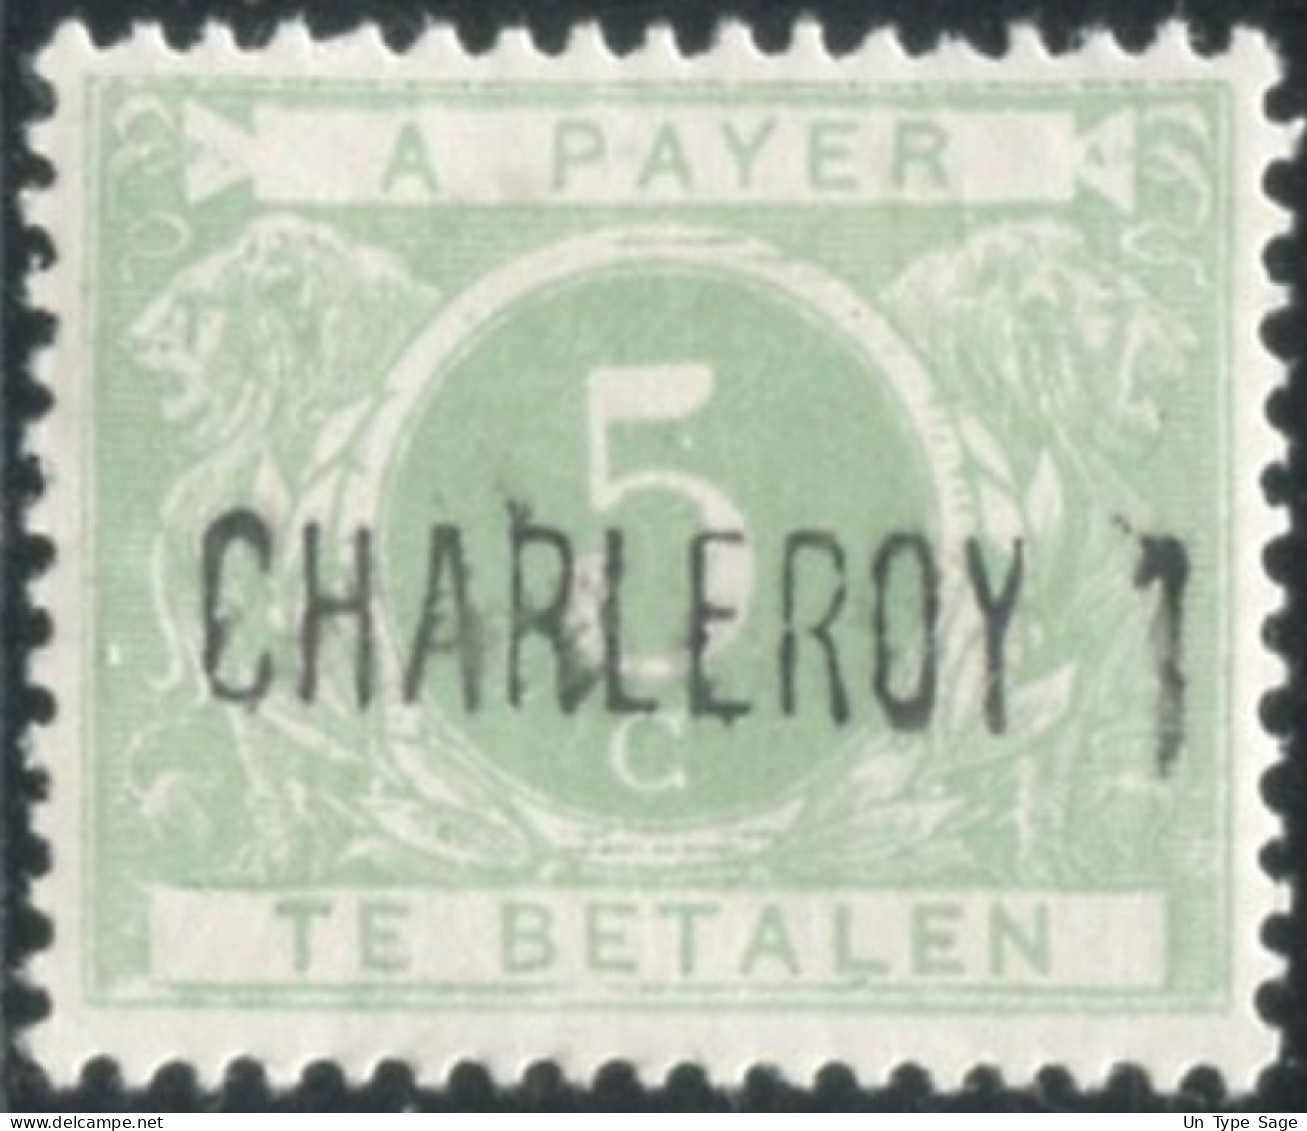 Belgique Timbre-taxe (TX) - Surcharge Locale De Distributeur - CHARLEROY 1 - (F995) - Sellos